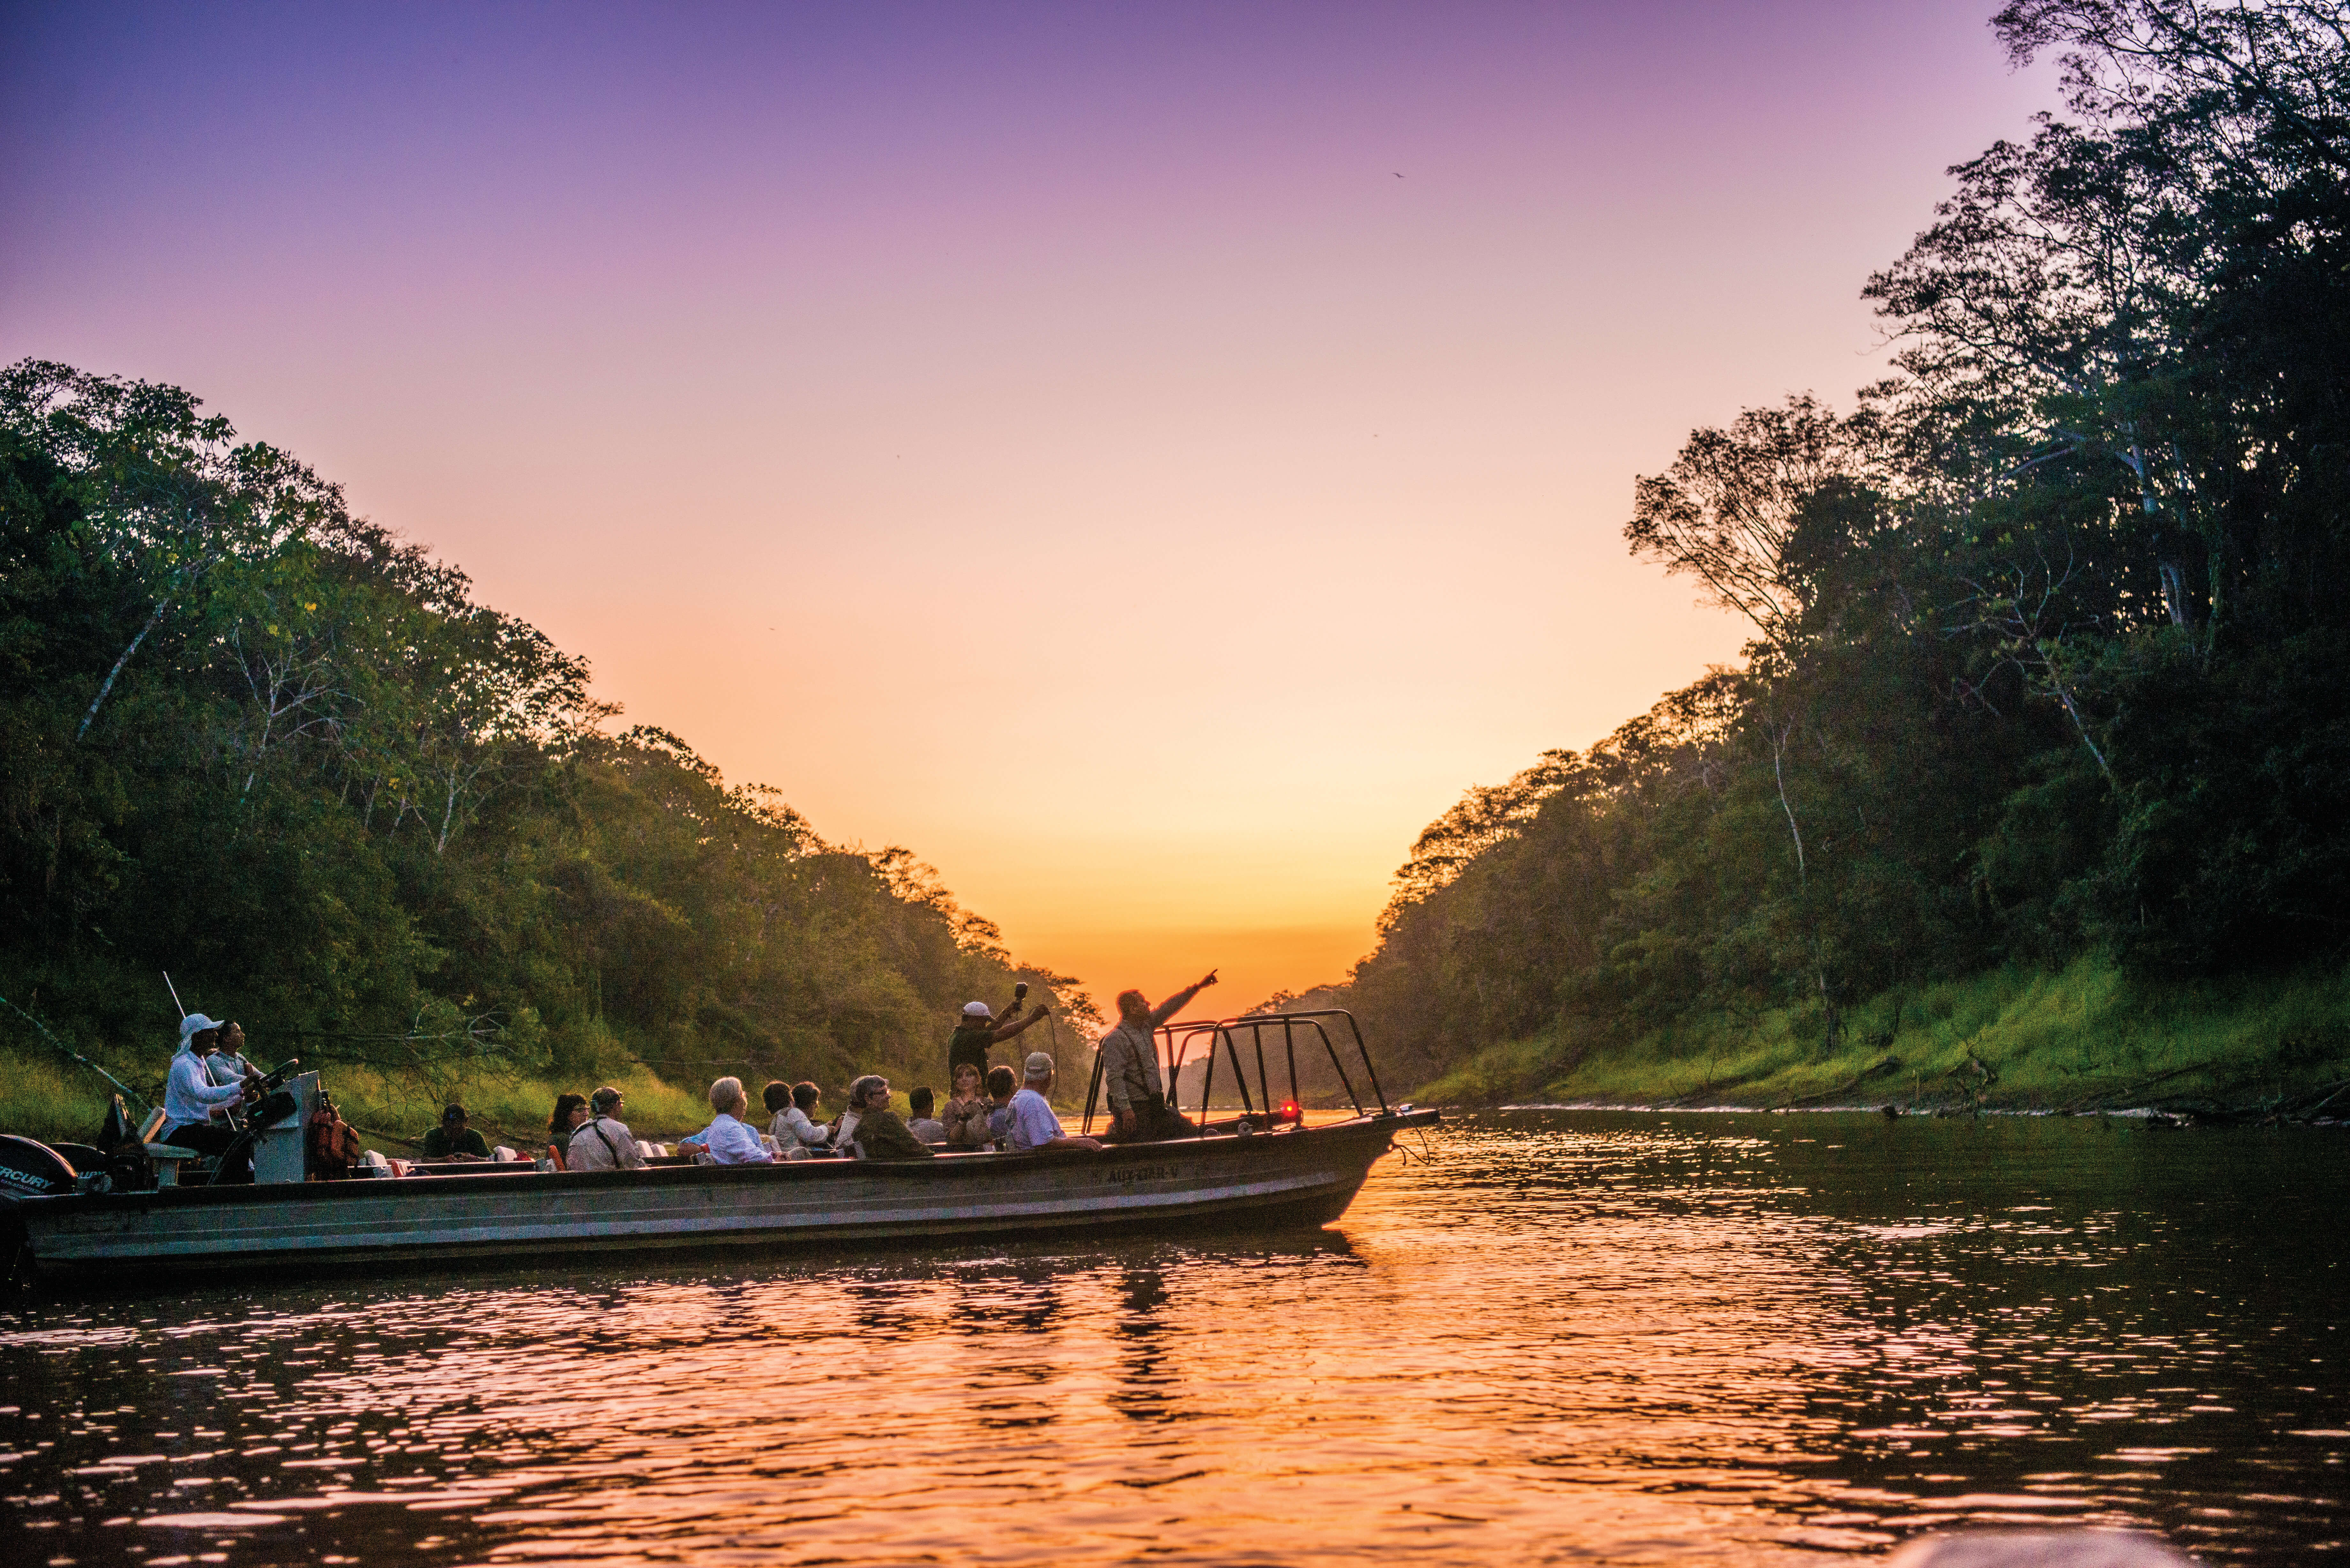 A skiff full of passengers exploring the Amazon at dusk